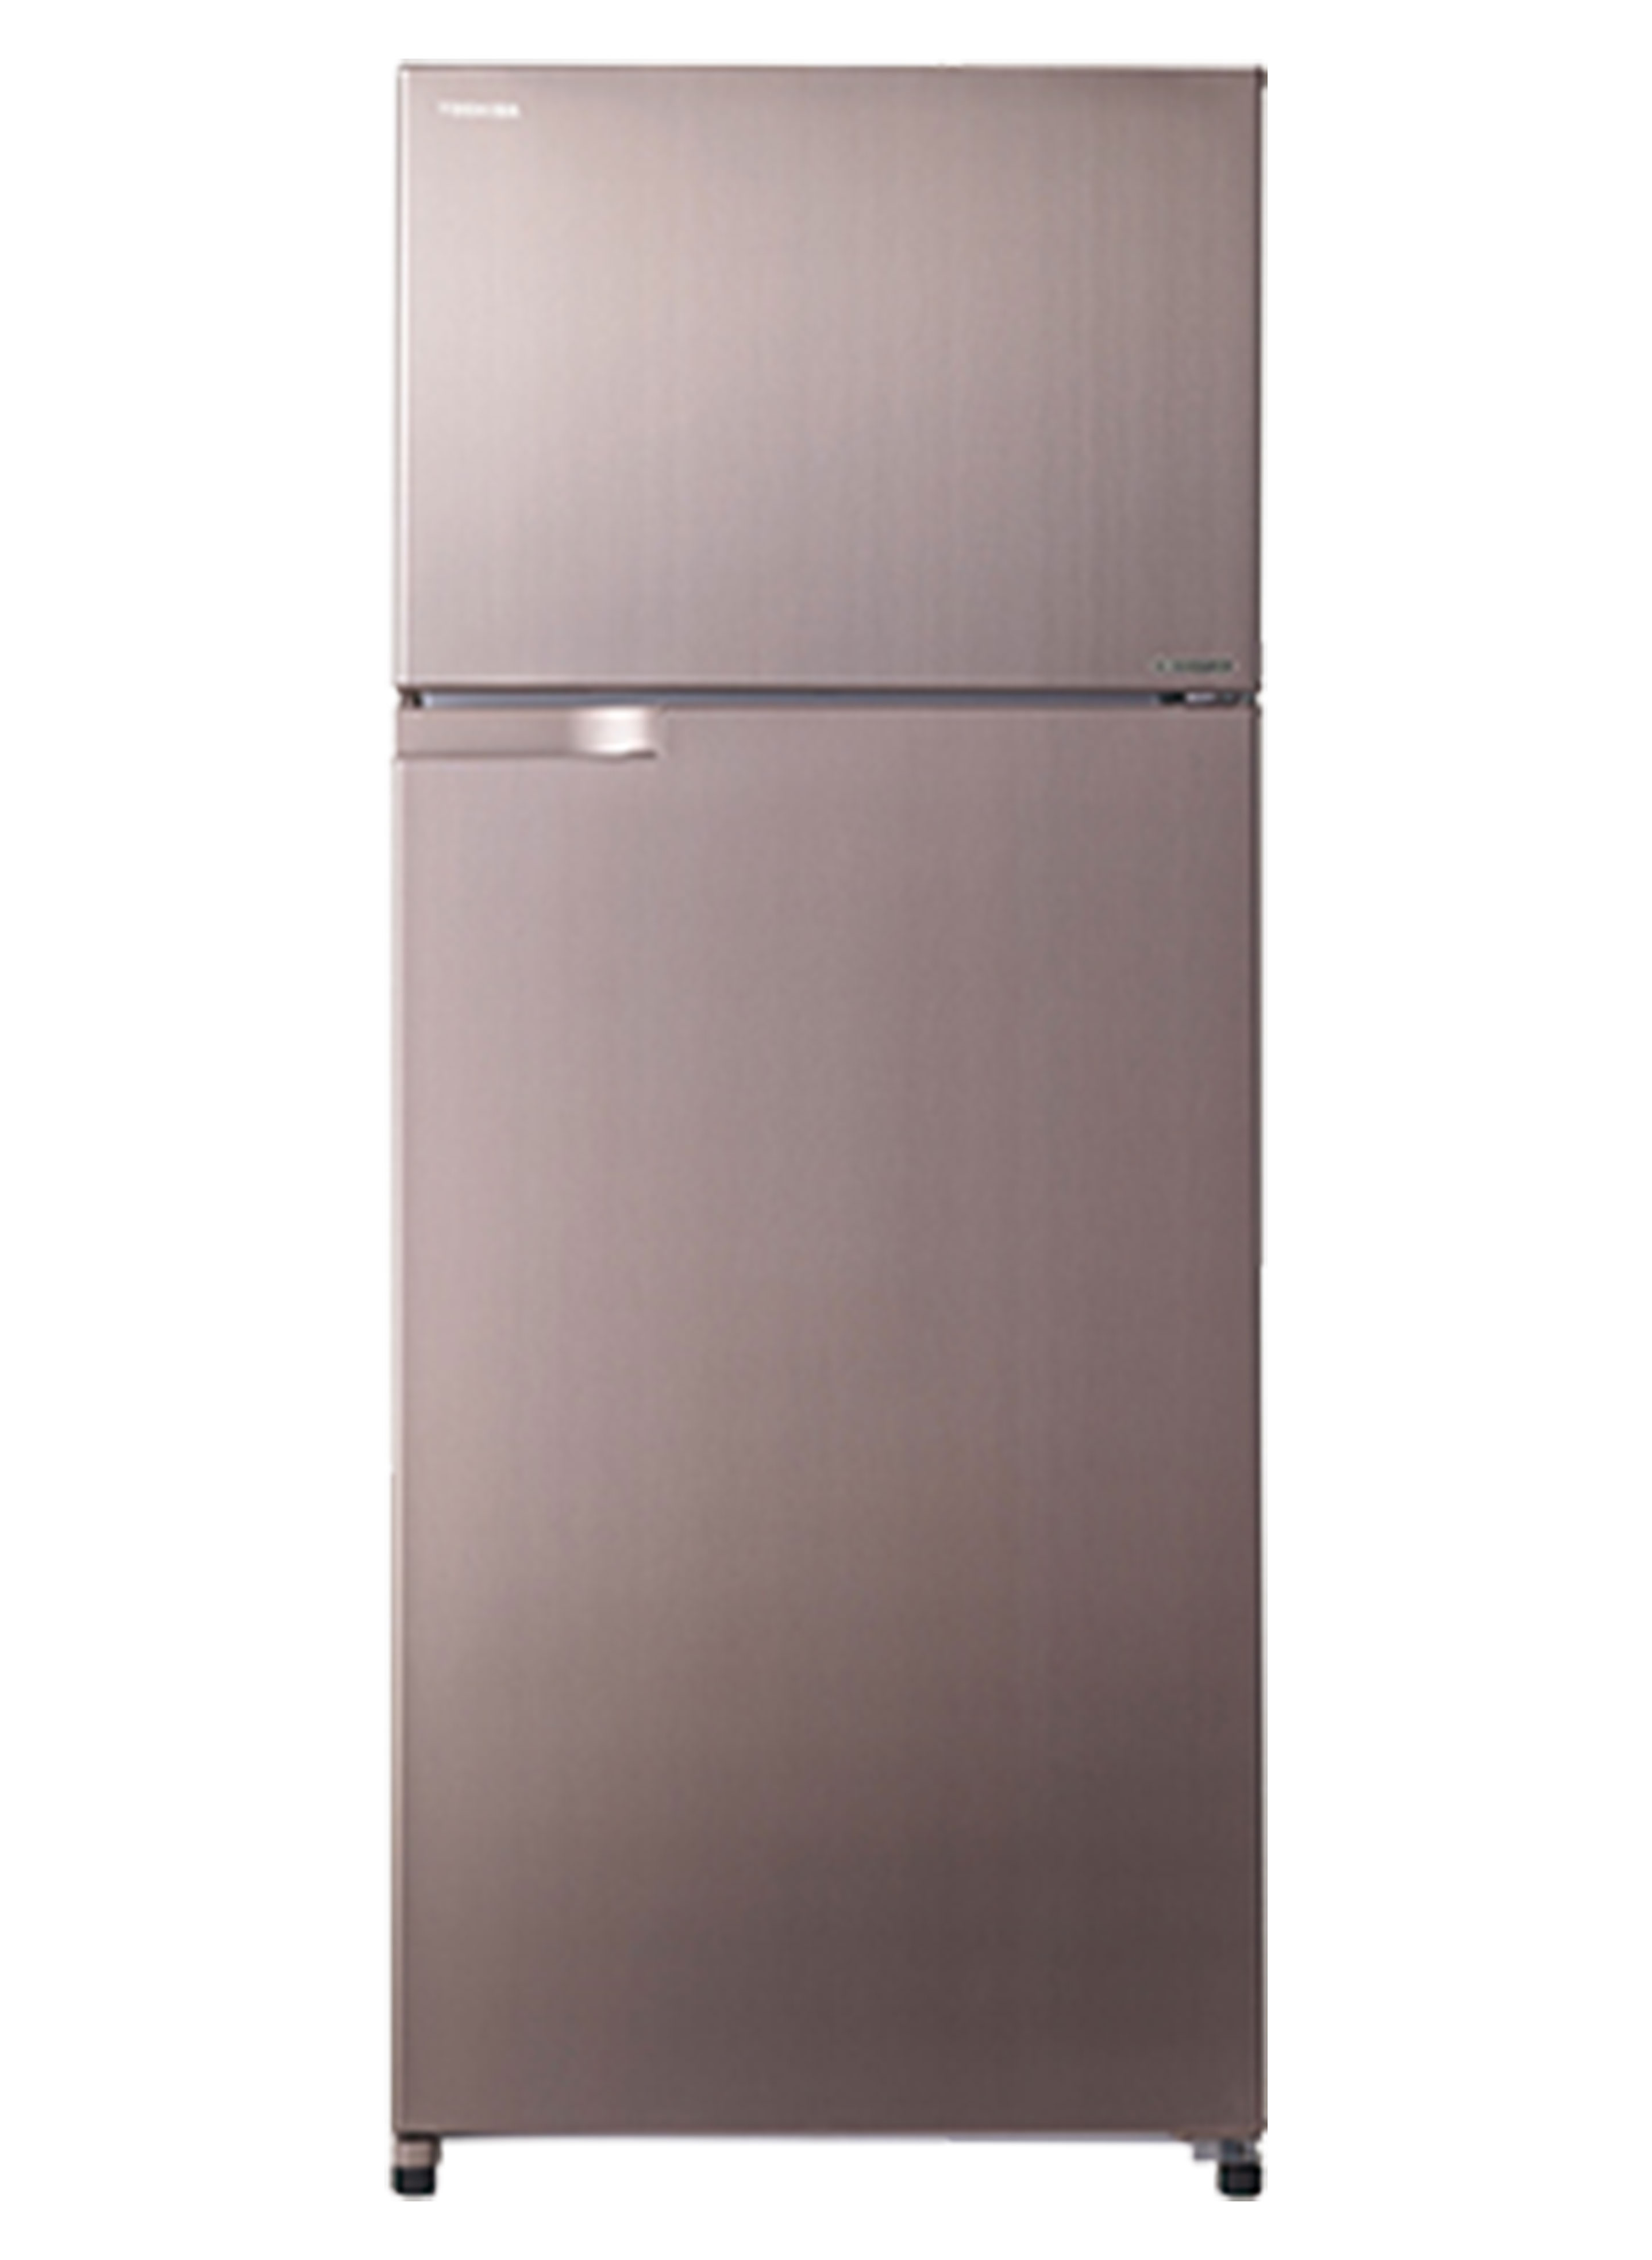 505L Refrigerator Reddish Gold